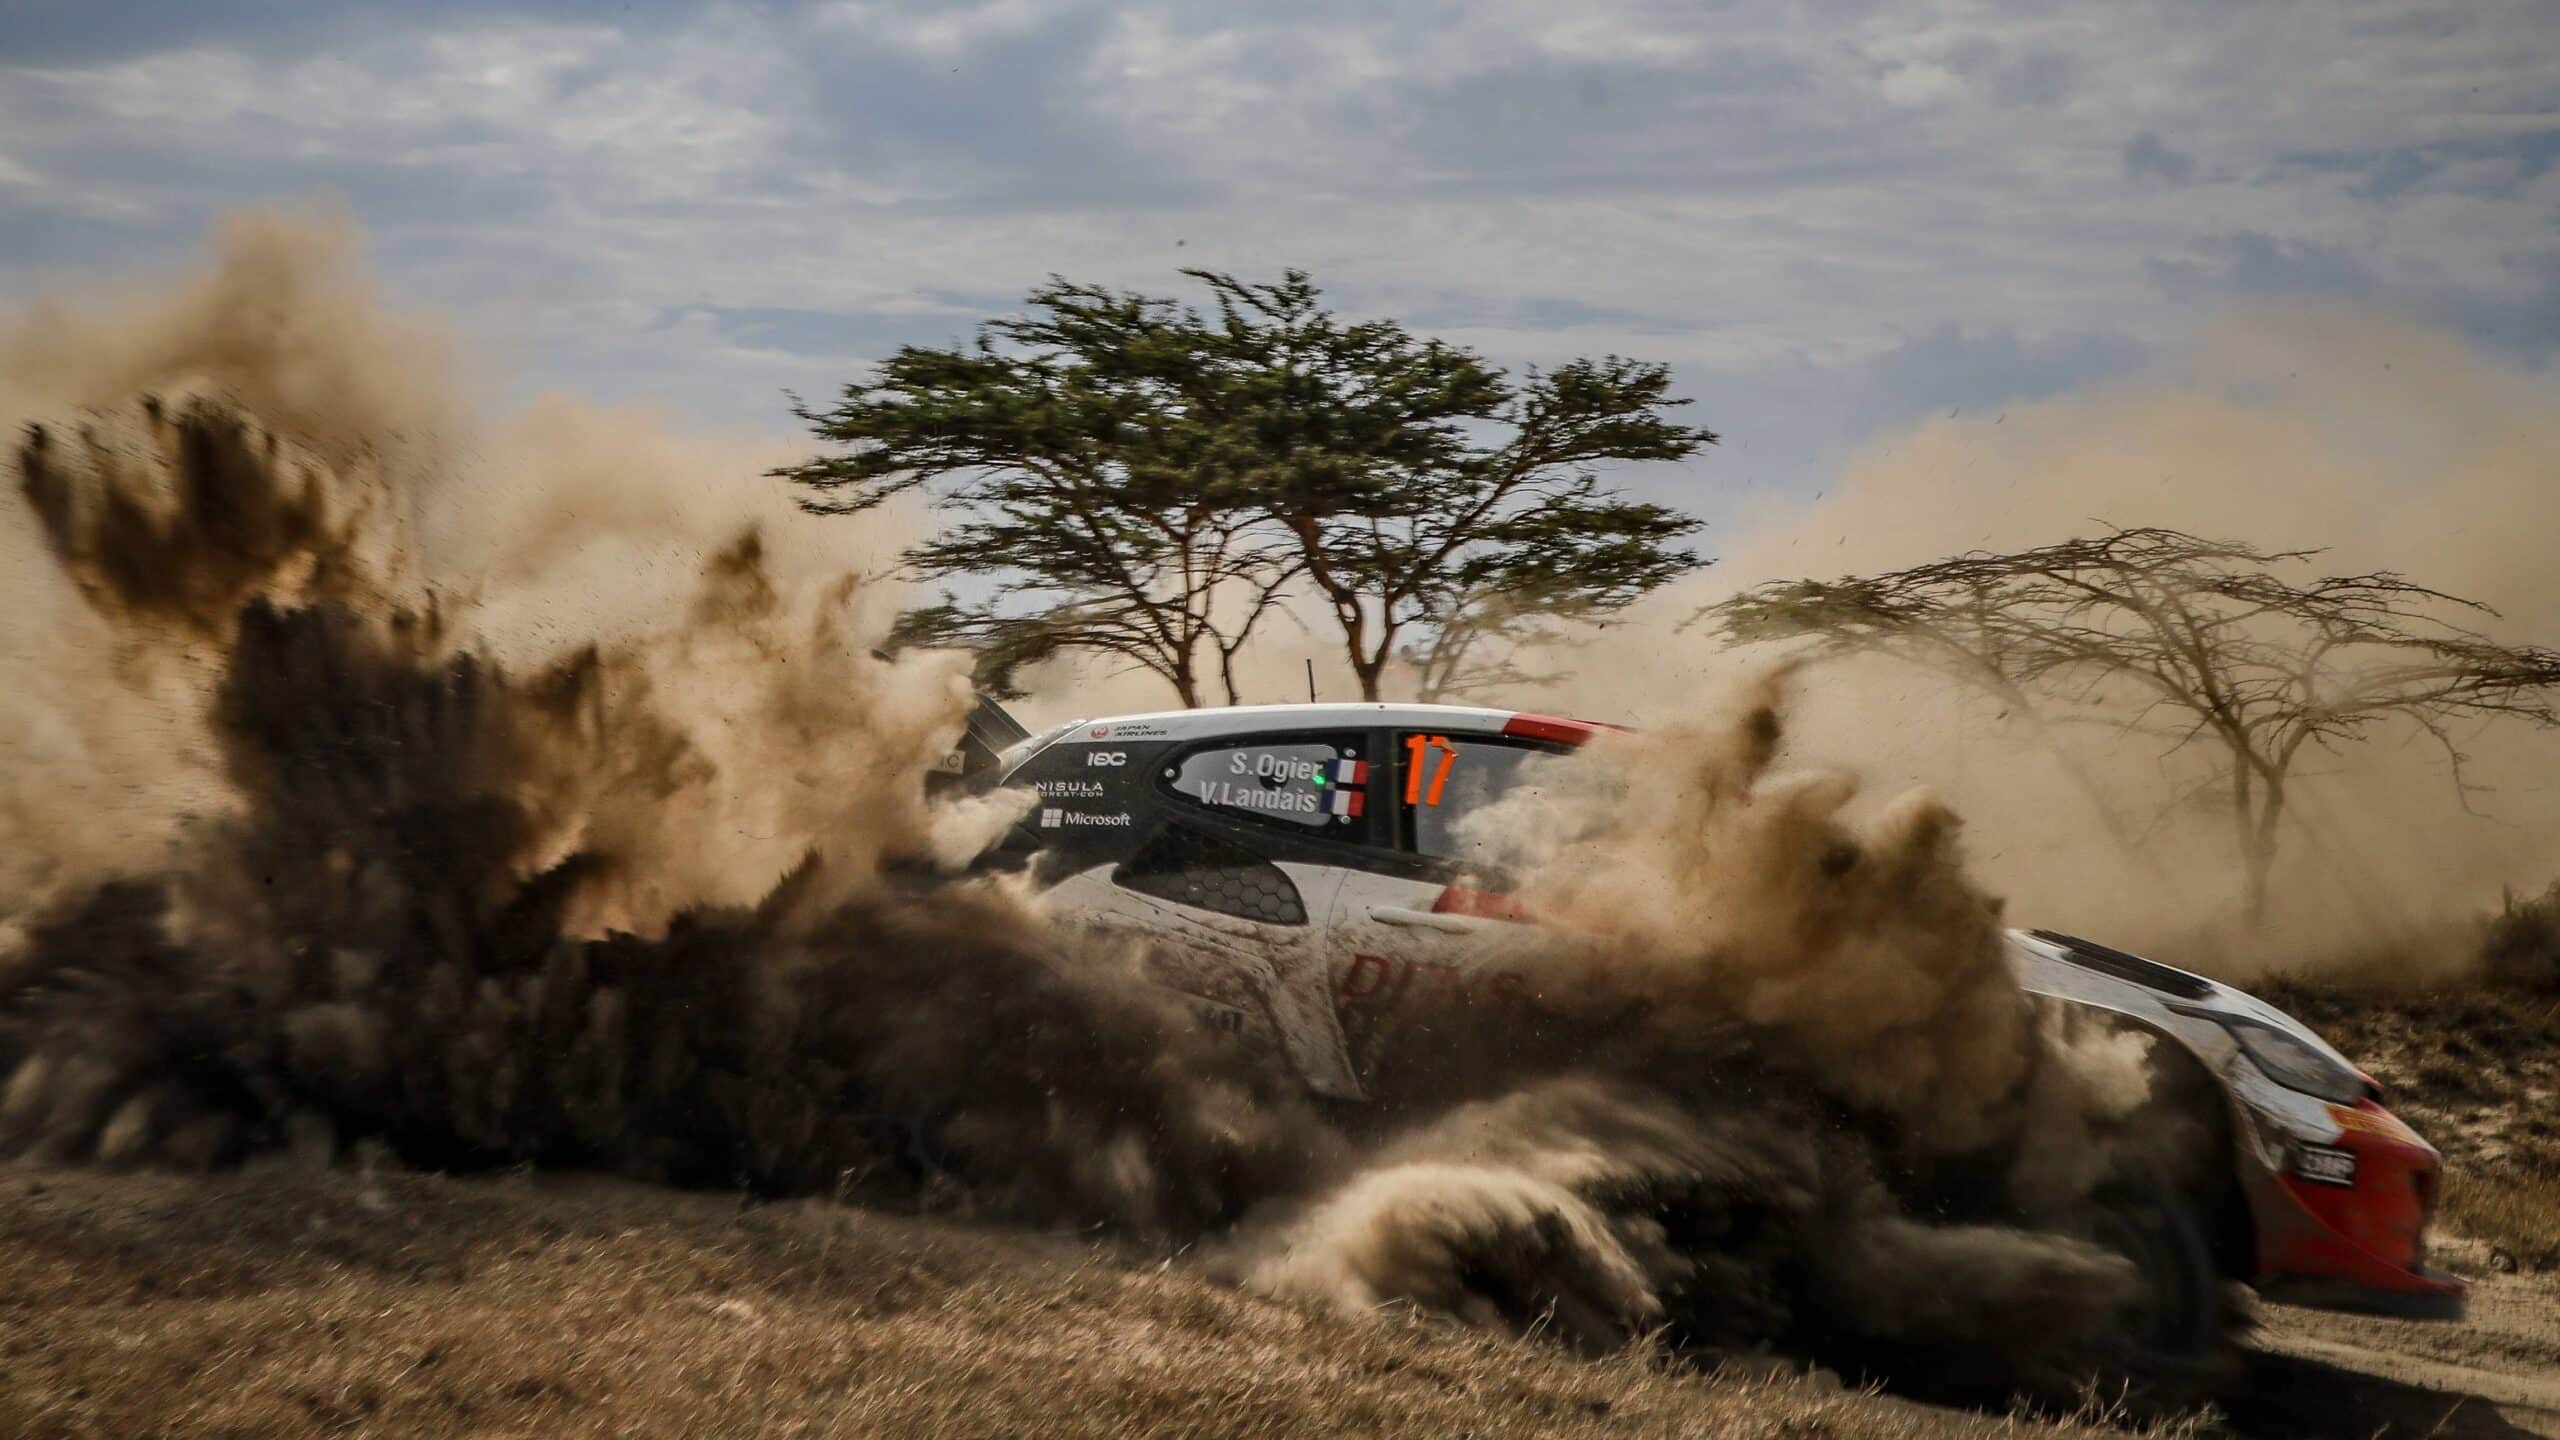 S.Ogier and V.Landais in Kenya WRC